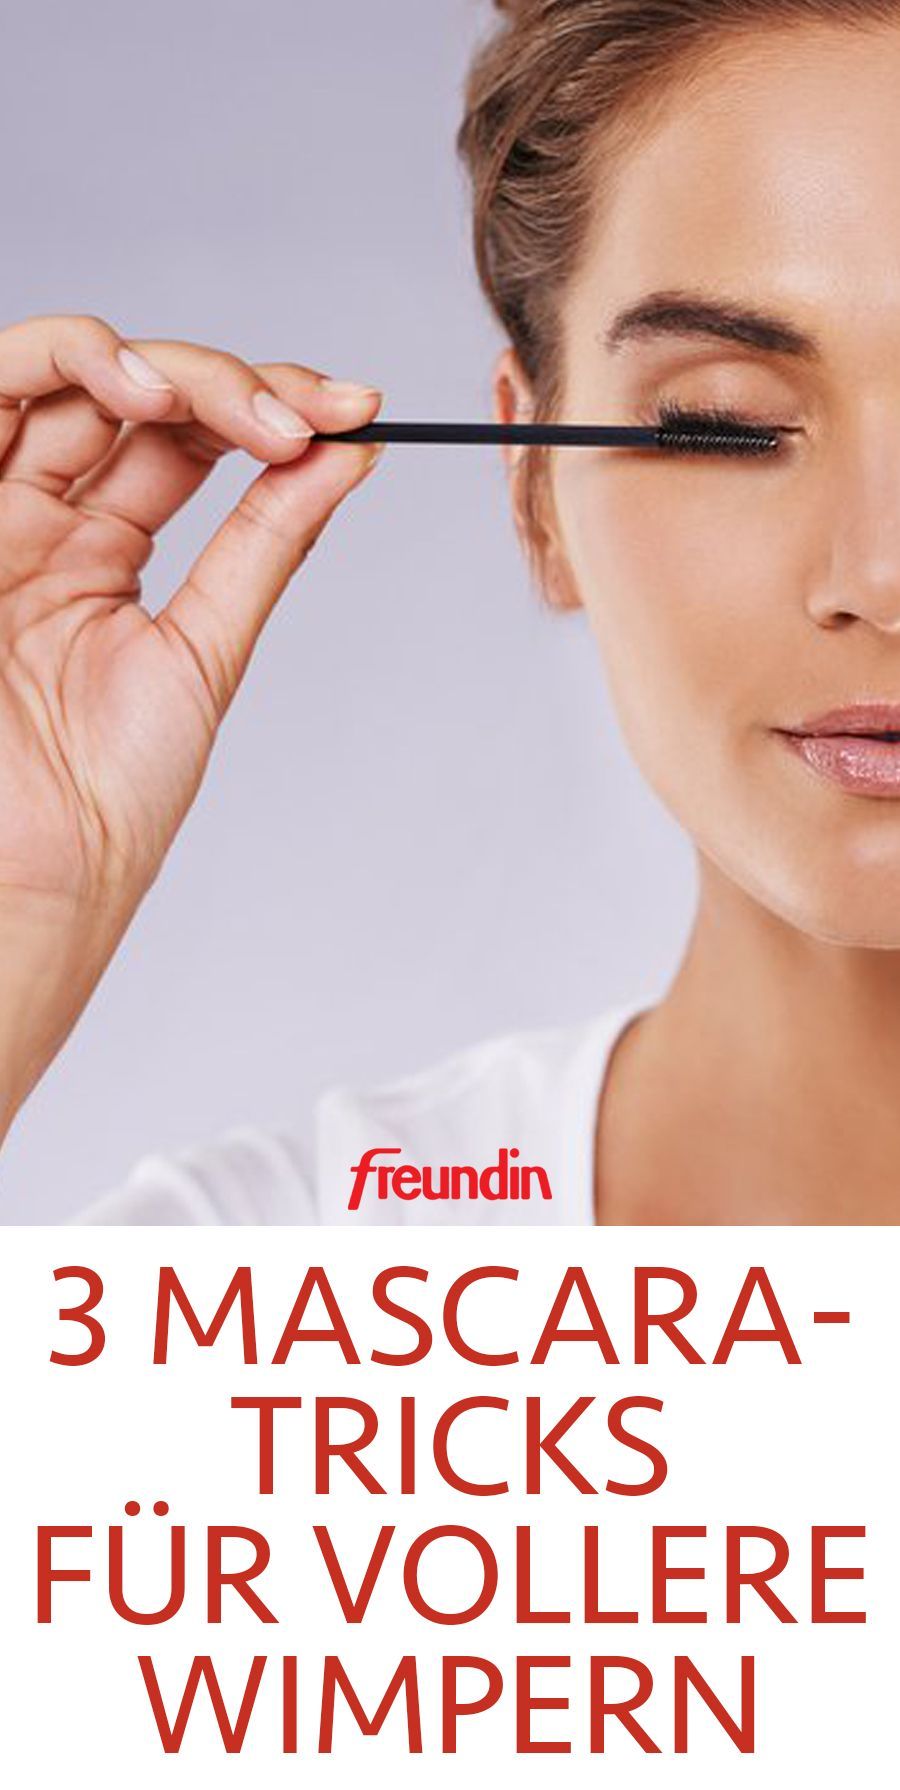 3 Mascara-Tricks f?r vollere Wimpern - 3 Mascara-Tricks f?r vollere Wimpern -   13 beauty Tipps Und Tricks augen ideas